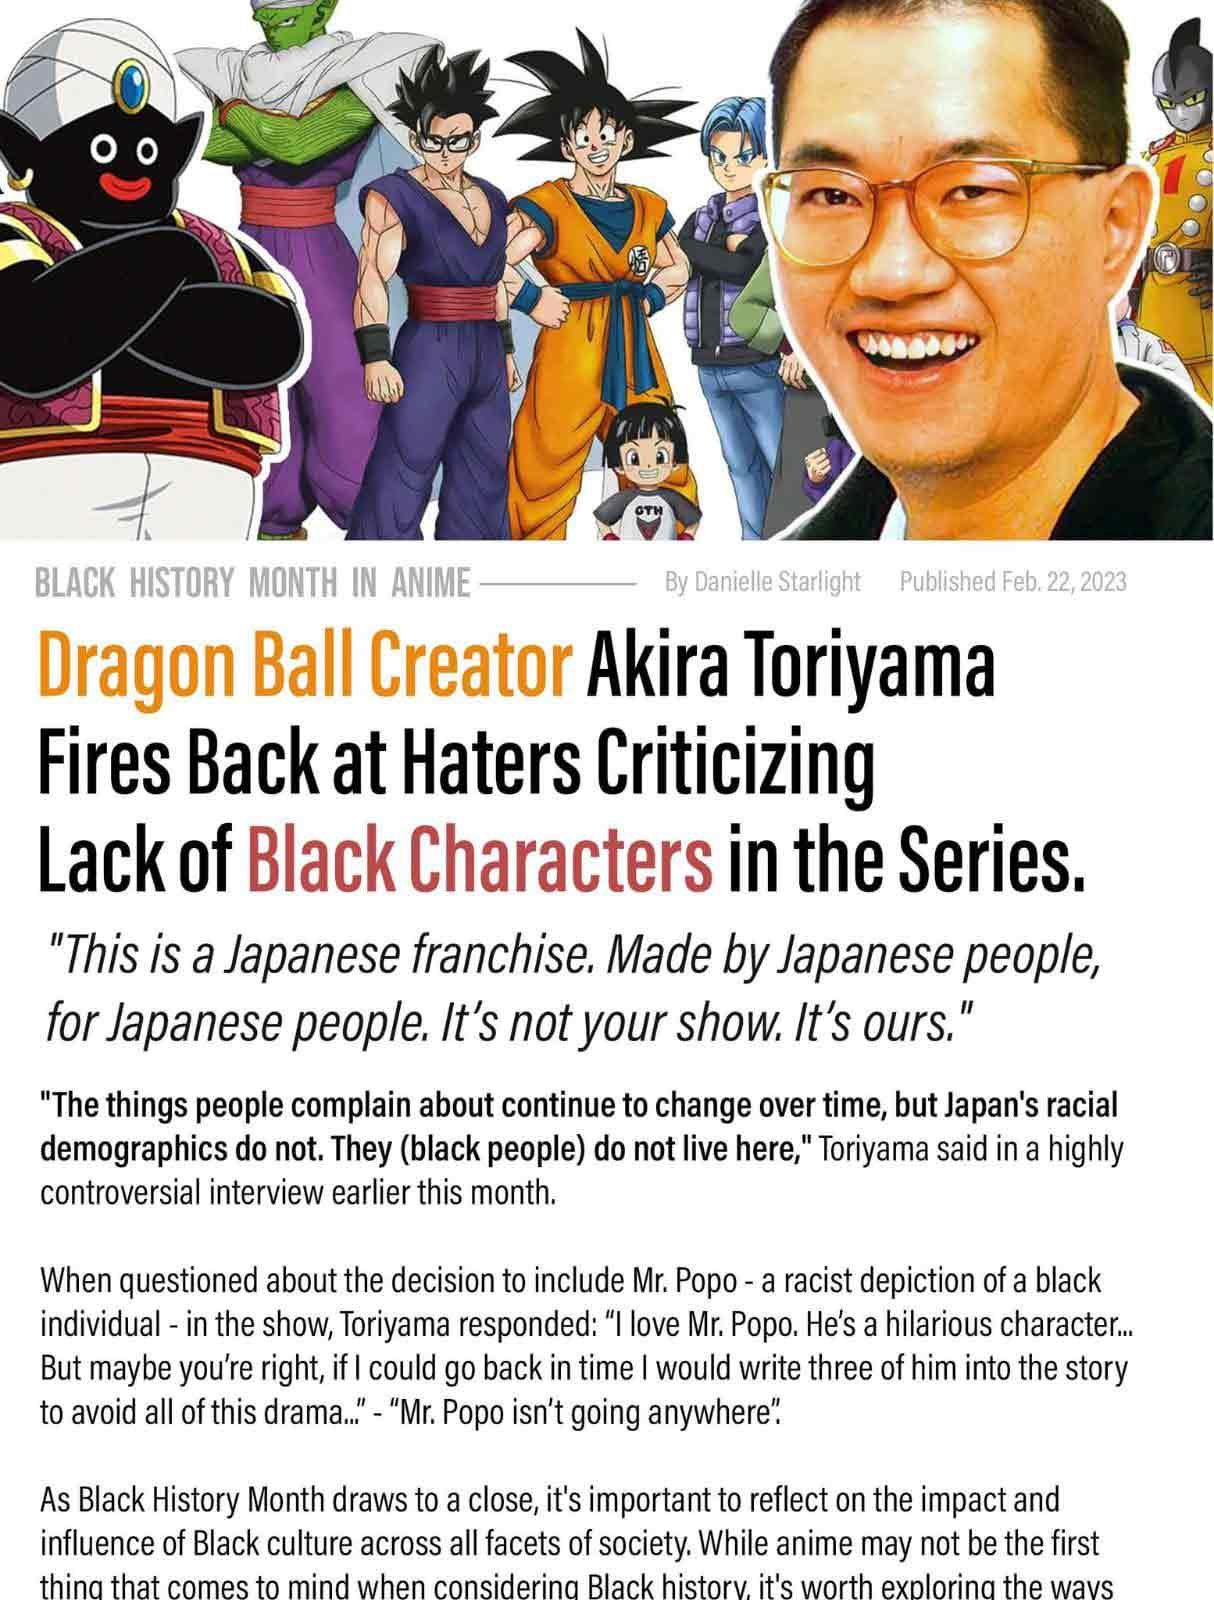 Dragon Ball Z: veja o guia completo de todas as sagas do anime